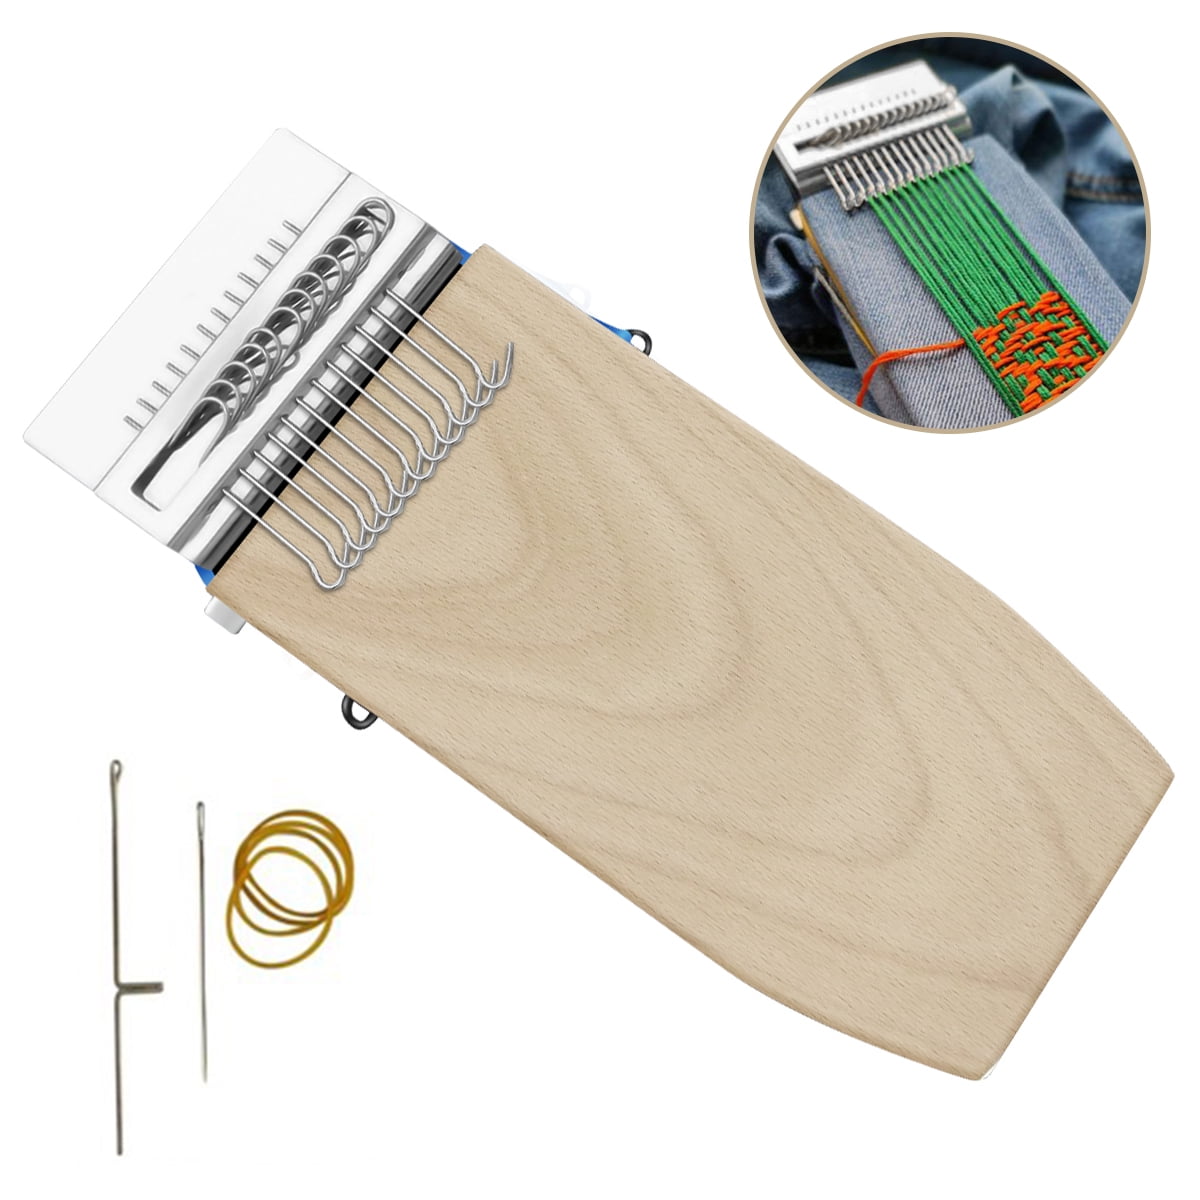 2022 Darning Mini Loom Machine for Mending Jeans Socks Clothes Loom Machine Makes Beautiful Stitching DIY Weaving Arts Wooden Speed Weve Darning Loom Type Weave Tool 10 Hooks Small Weaving Loom 